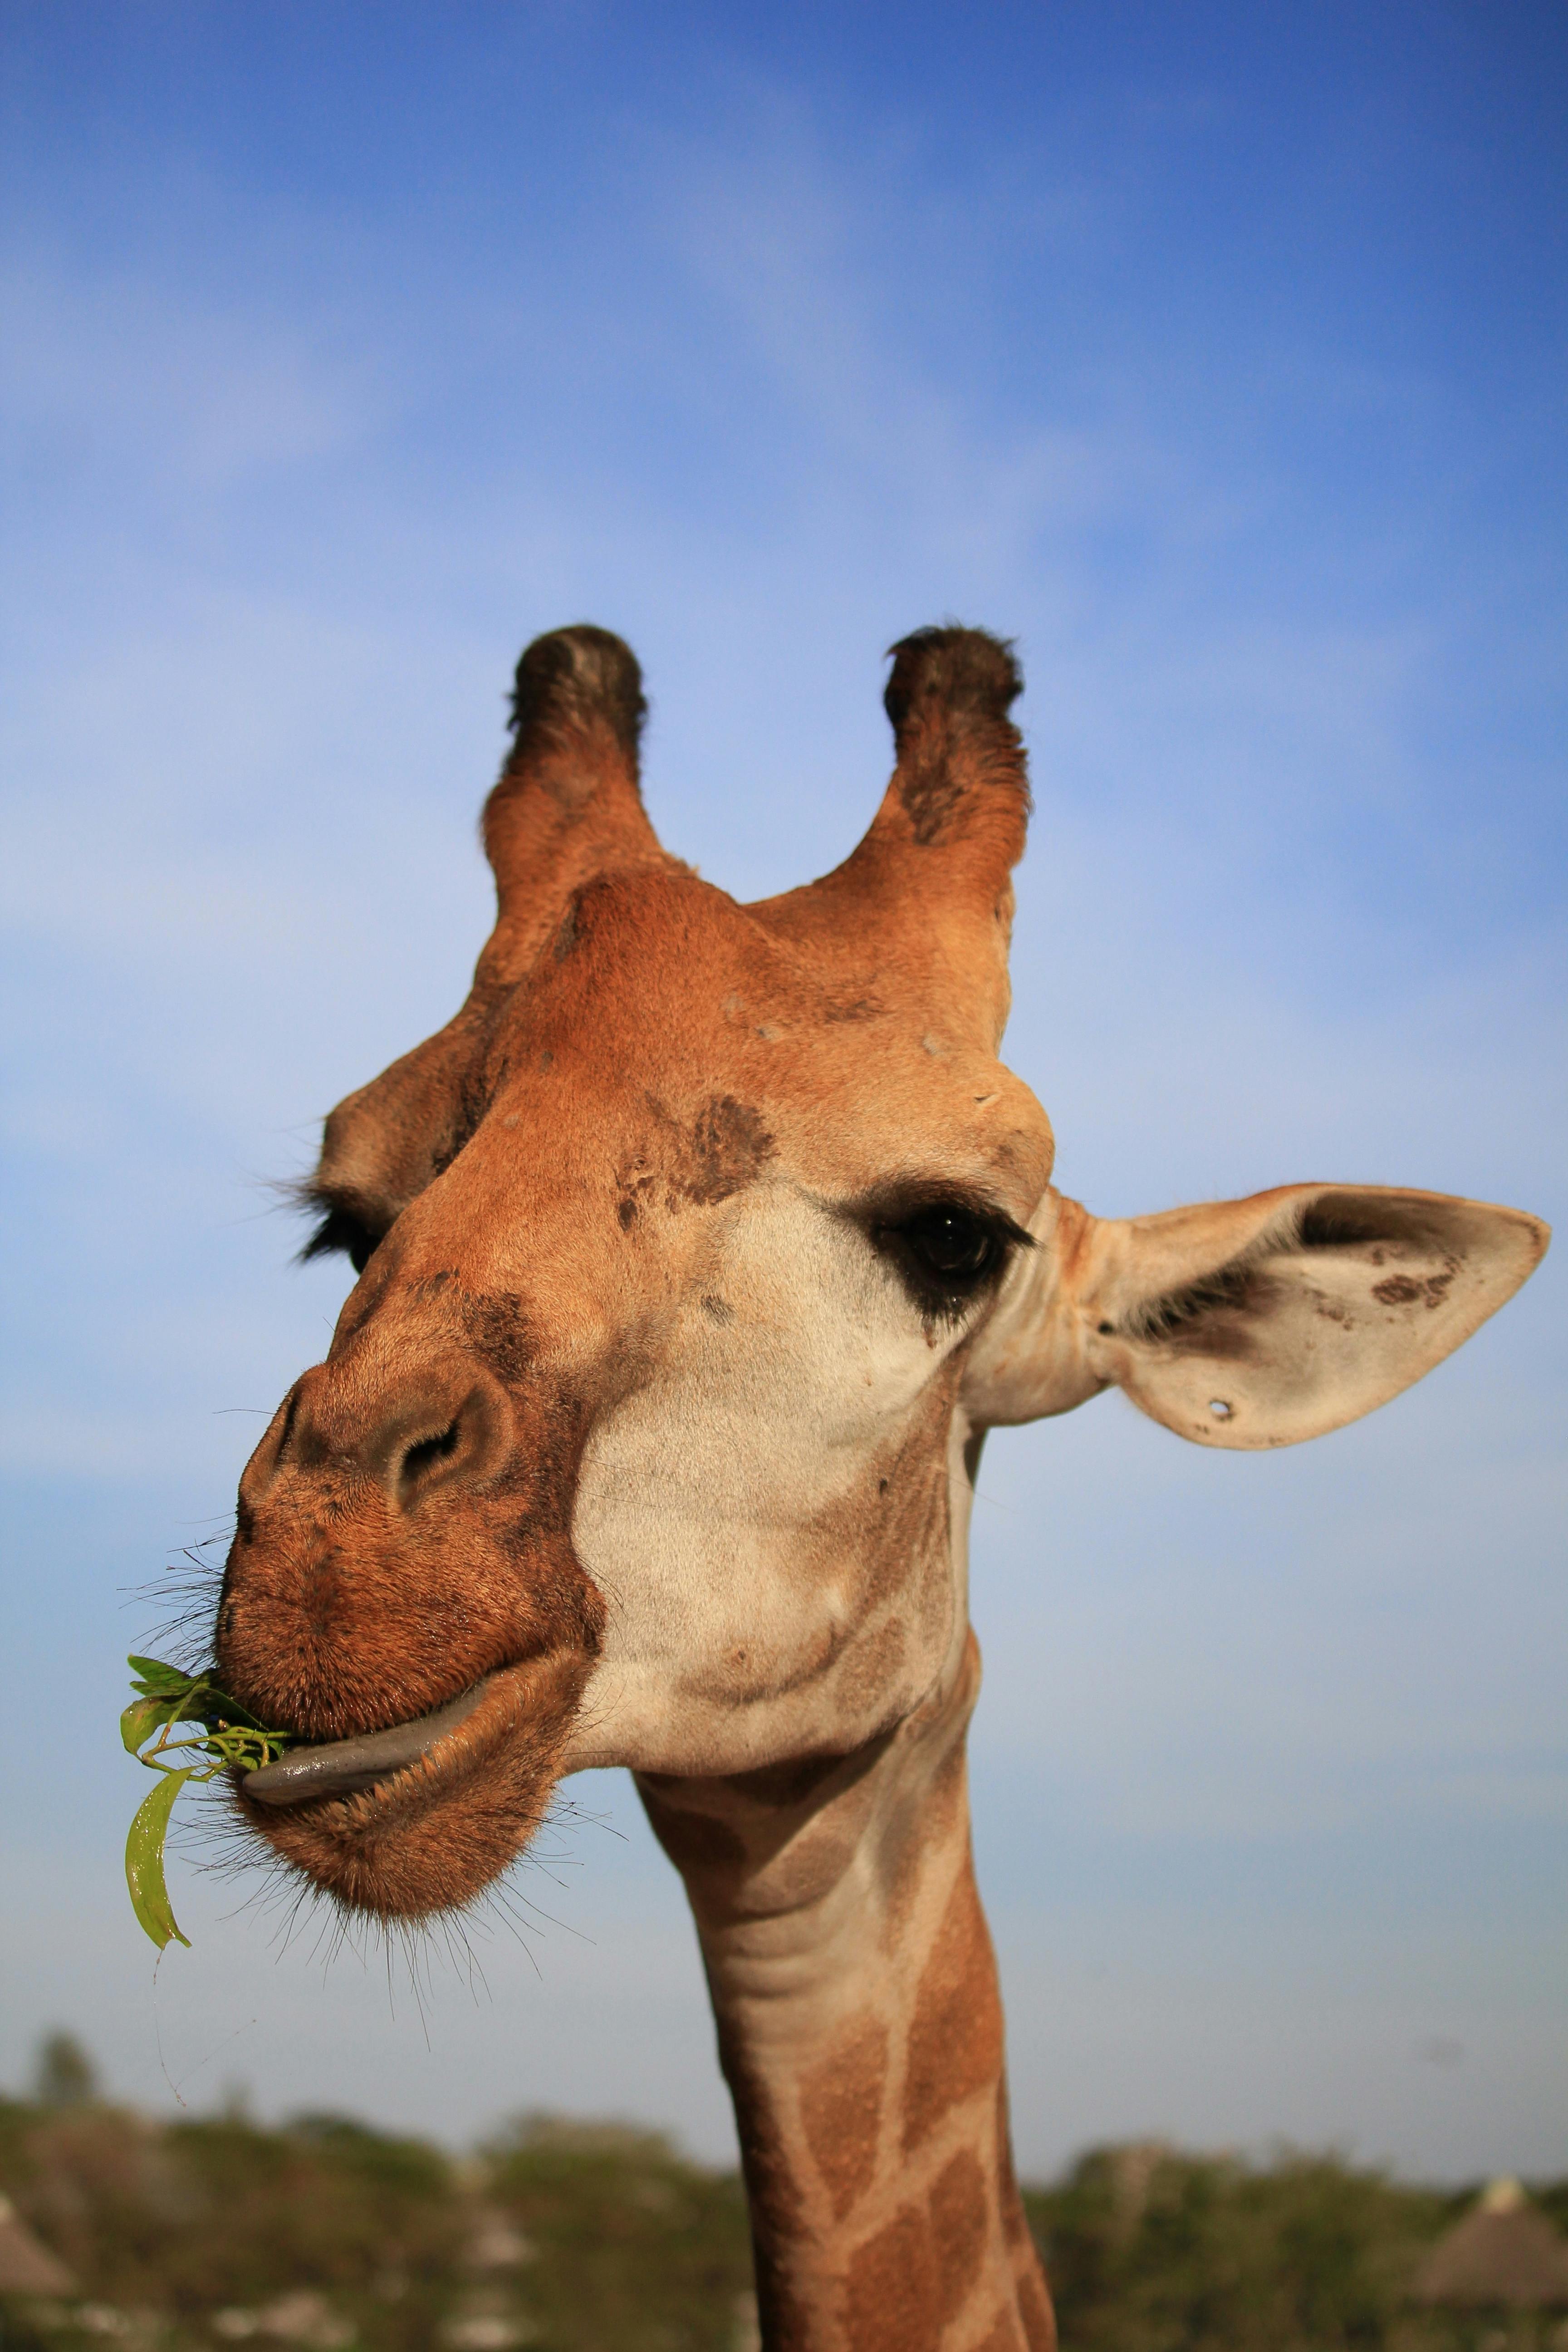 giraffe tongue eating leaves